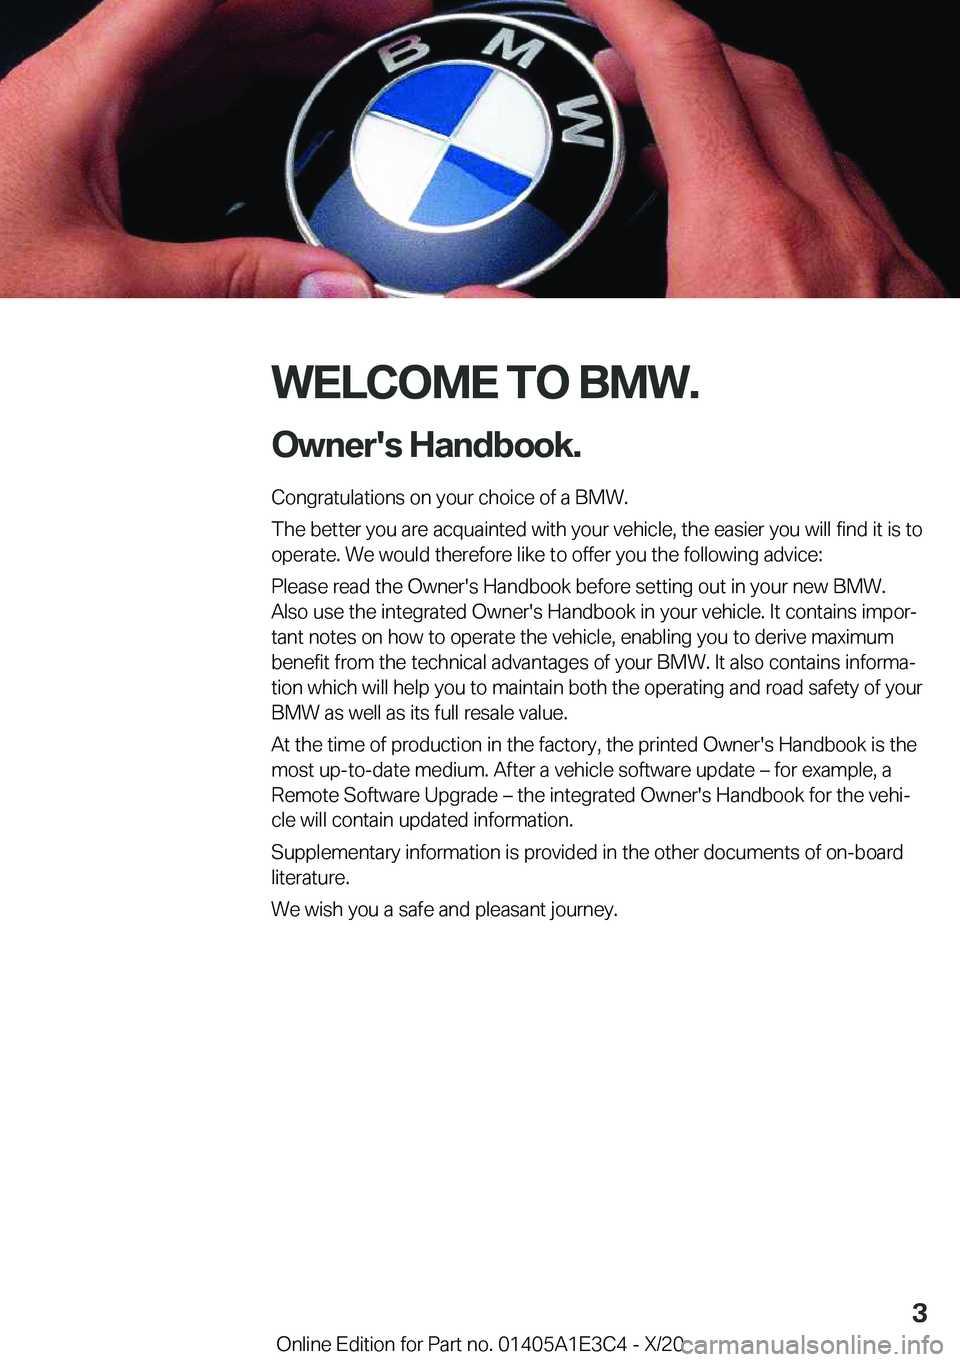 BMW M4 2021  Owners Manual �W�E�L�C�O�M�E��T�O��B�M�W�.�O�w�n�e�r�'�s��H�a�n�d�b�o�o�k�.
�C�o�n�g�r�a�t�u�l�a�t�i�o�n�s��o�n��y�o�u�r��c�h�o�i�c�e��o�f��a��B�M�W�.
�T�h�e��b�e�t�t�e�r��y�o�u��a�r�e��a�c�q�u�a�i